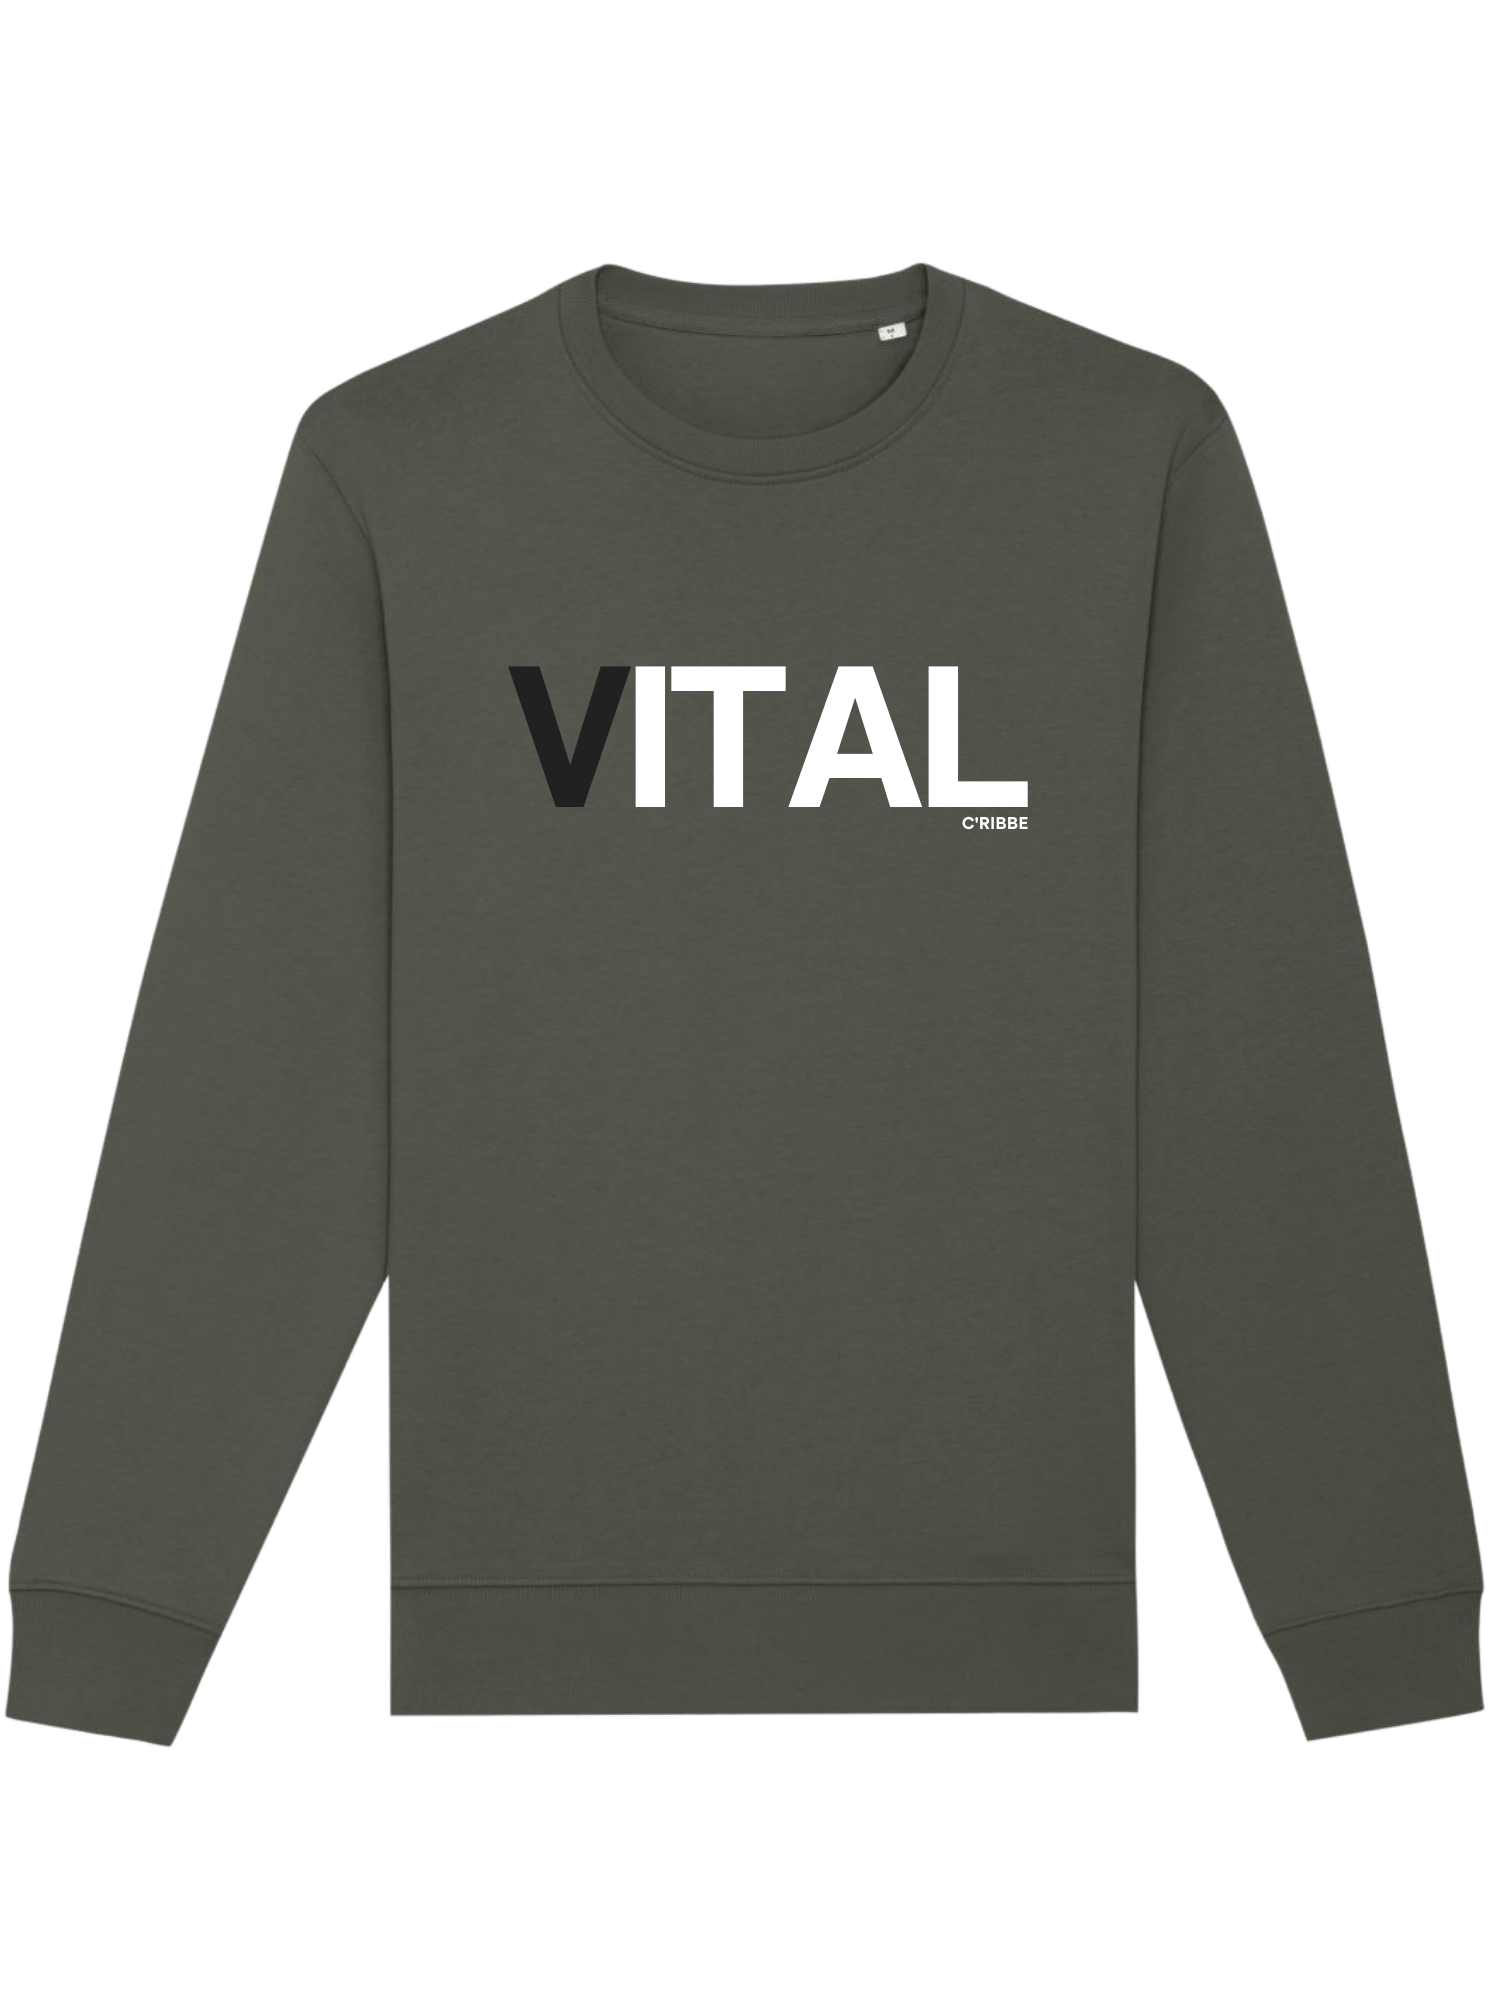 V-ITAL Unisex Sweatshirt Black